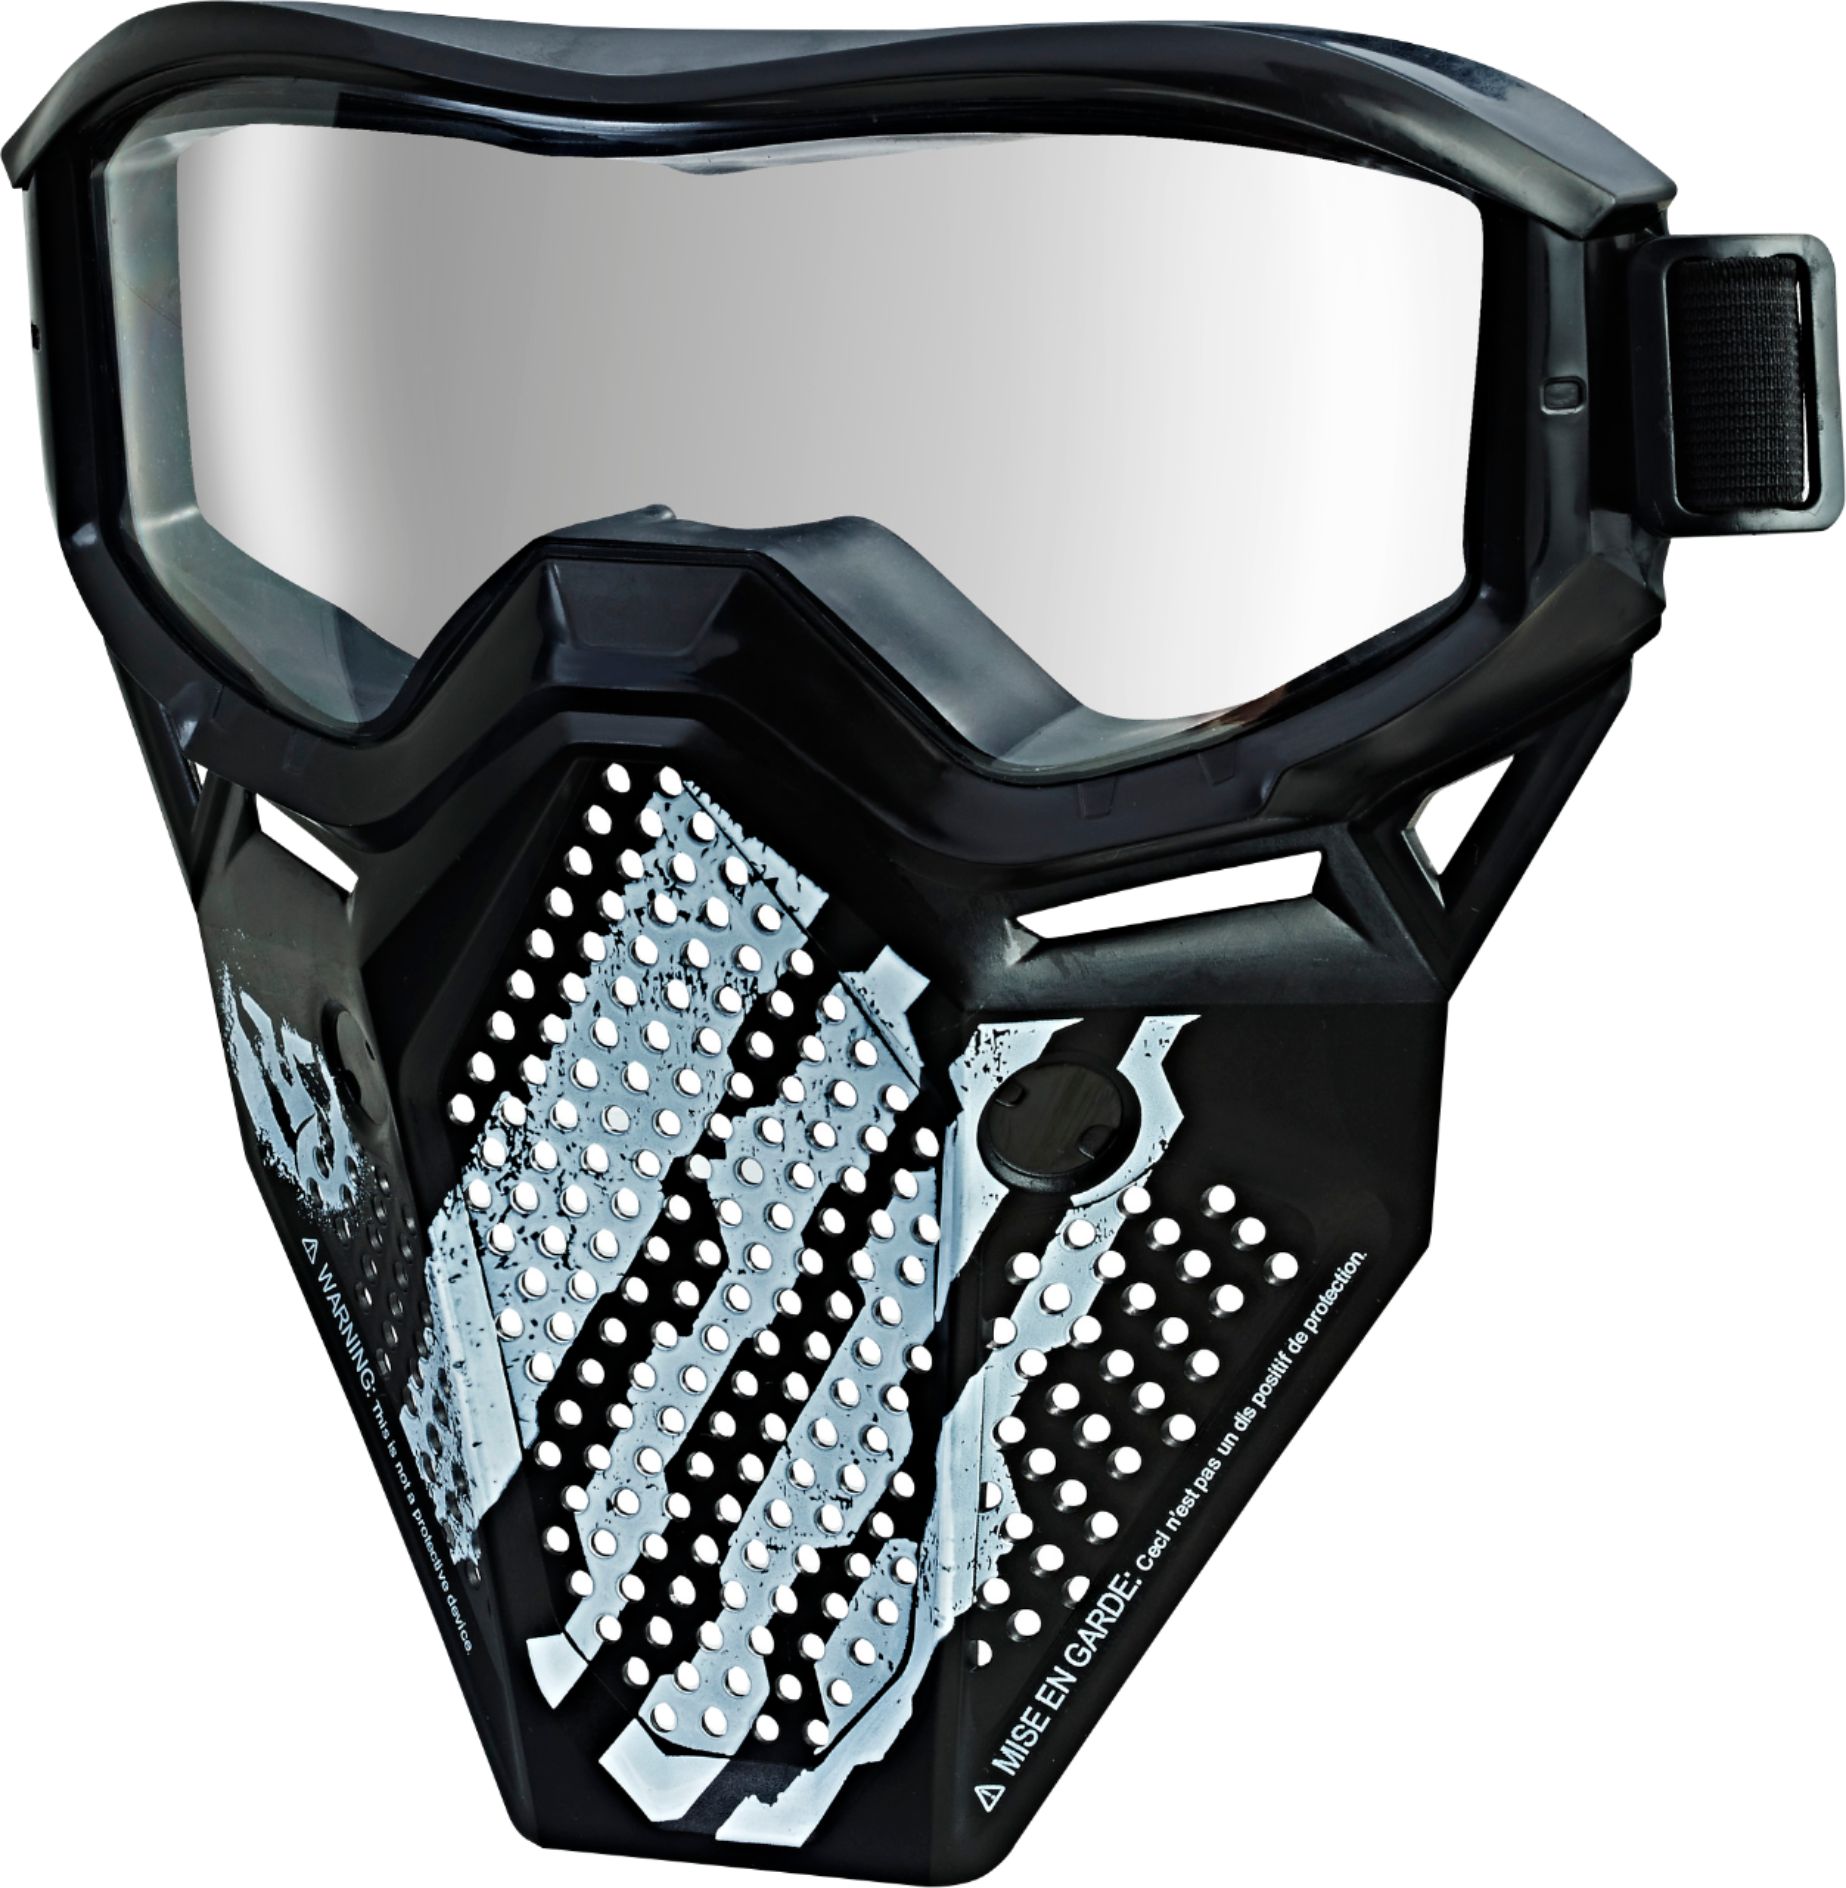 Cf266 NERF Rival Precision Battling Face Mask Blue for sale online 